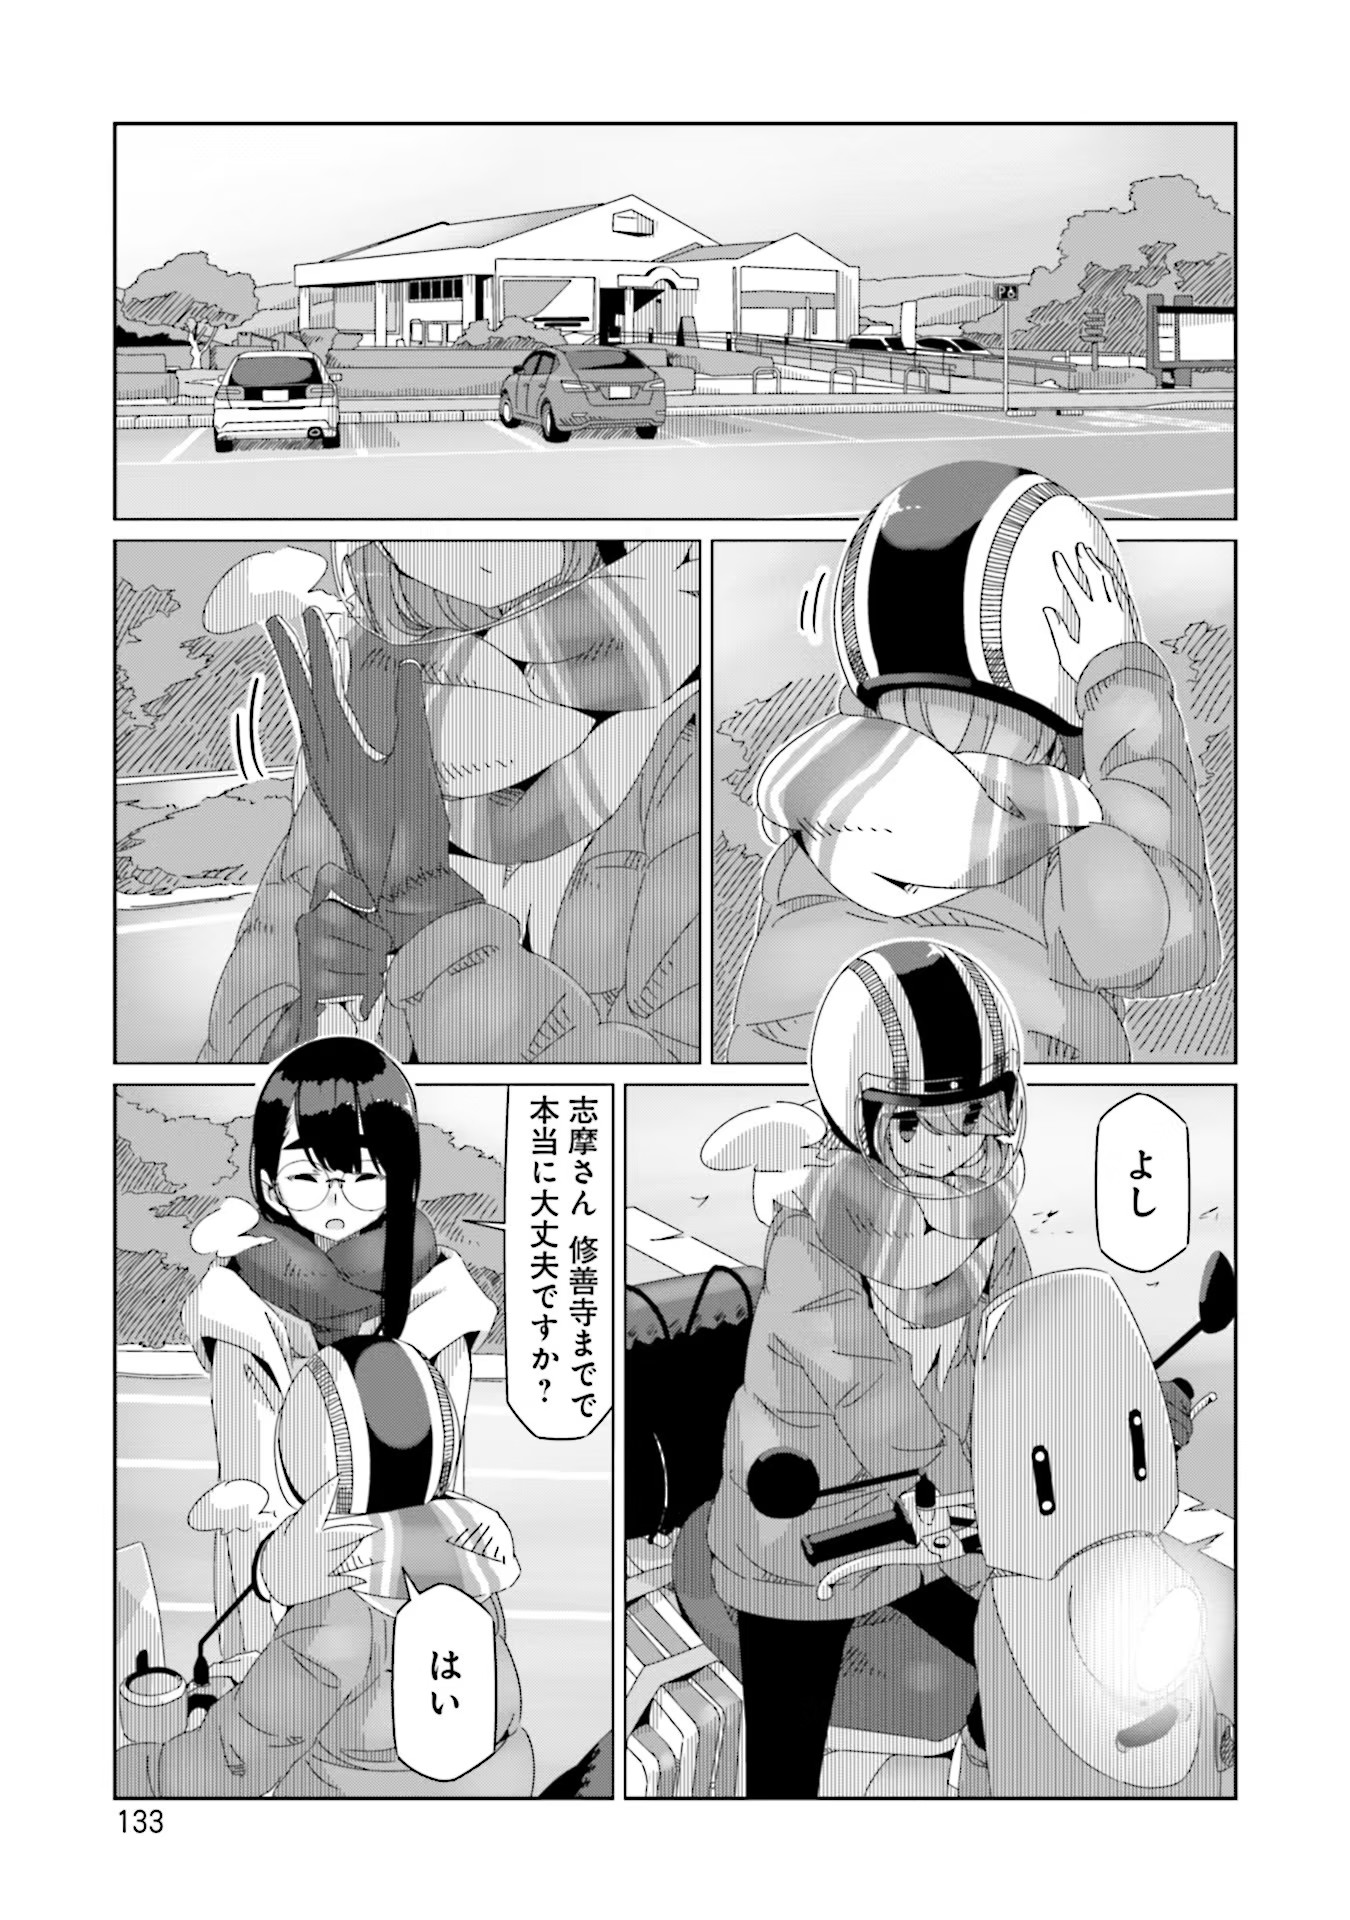 Yuru Camp - Chapter 52 - Page 1